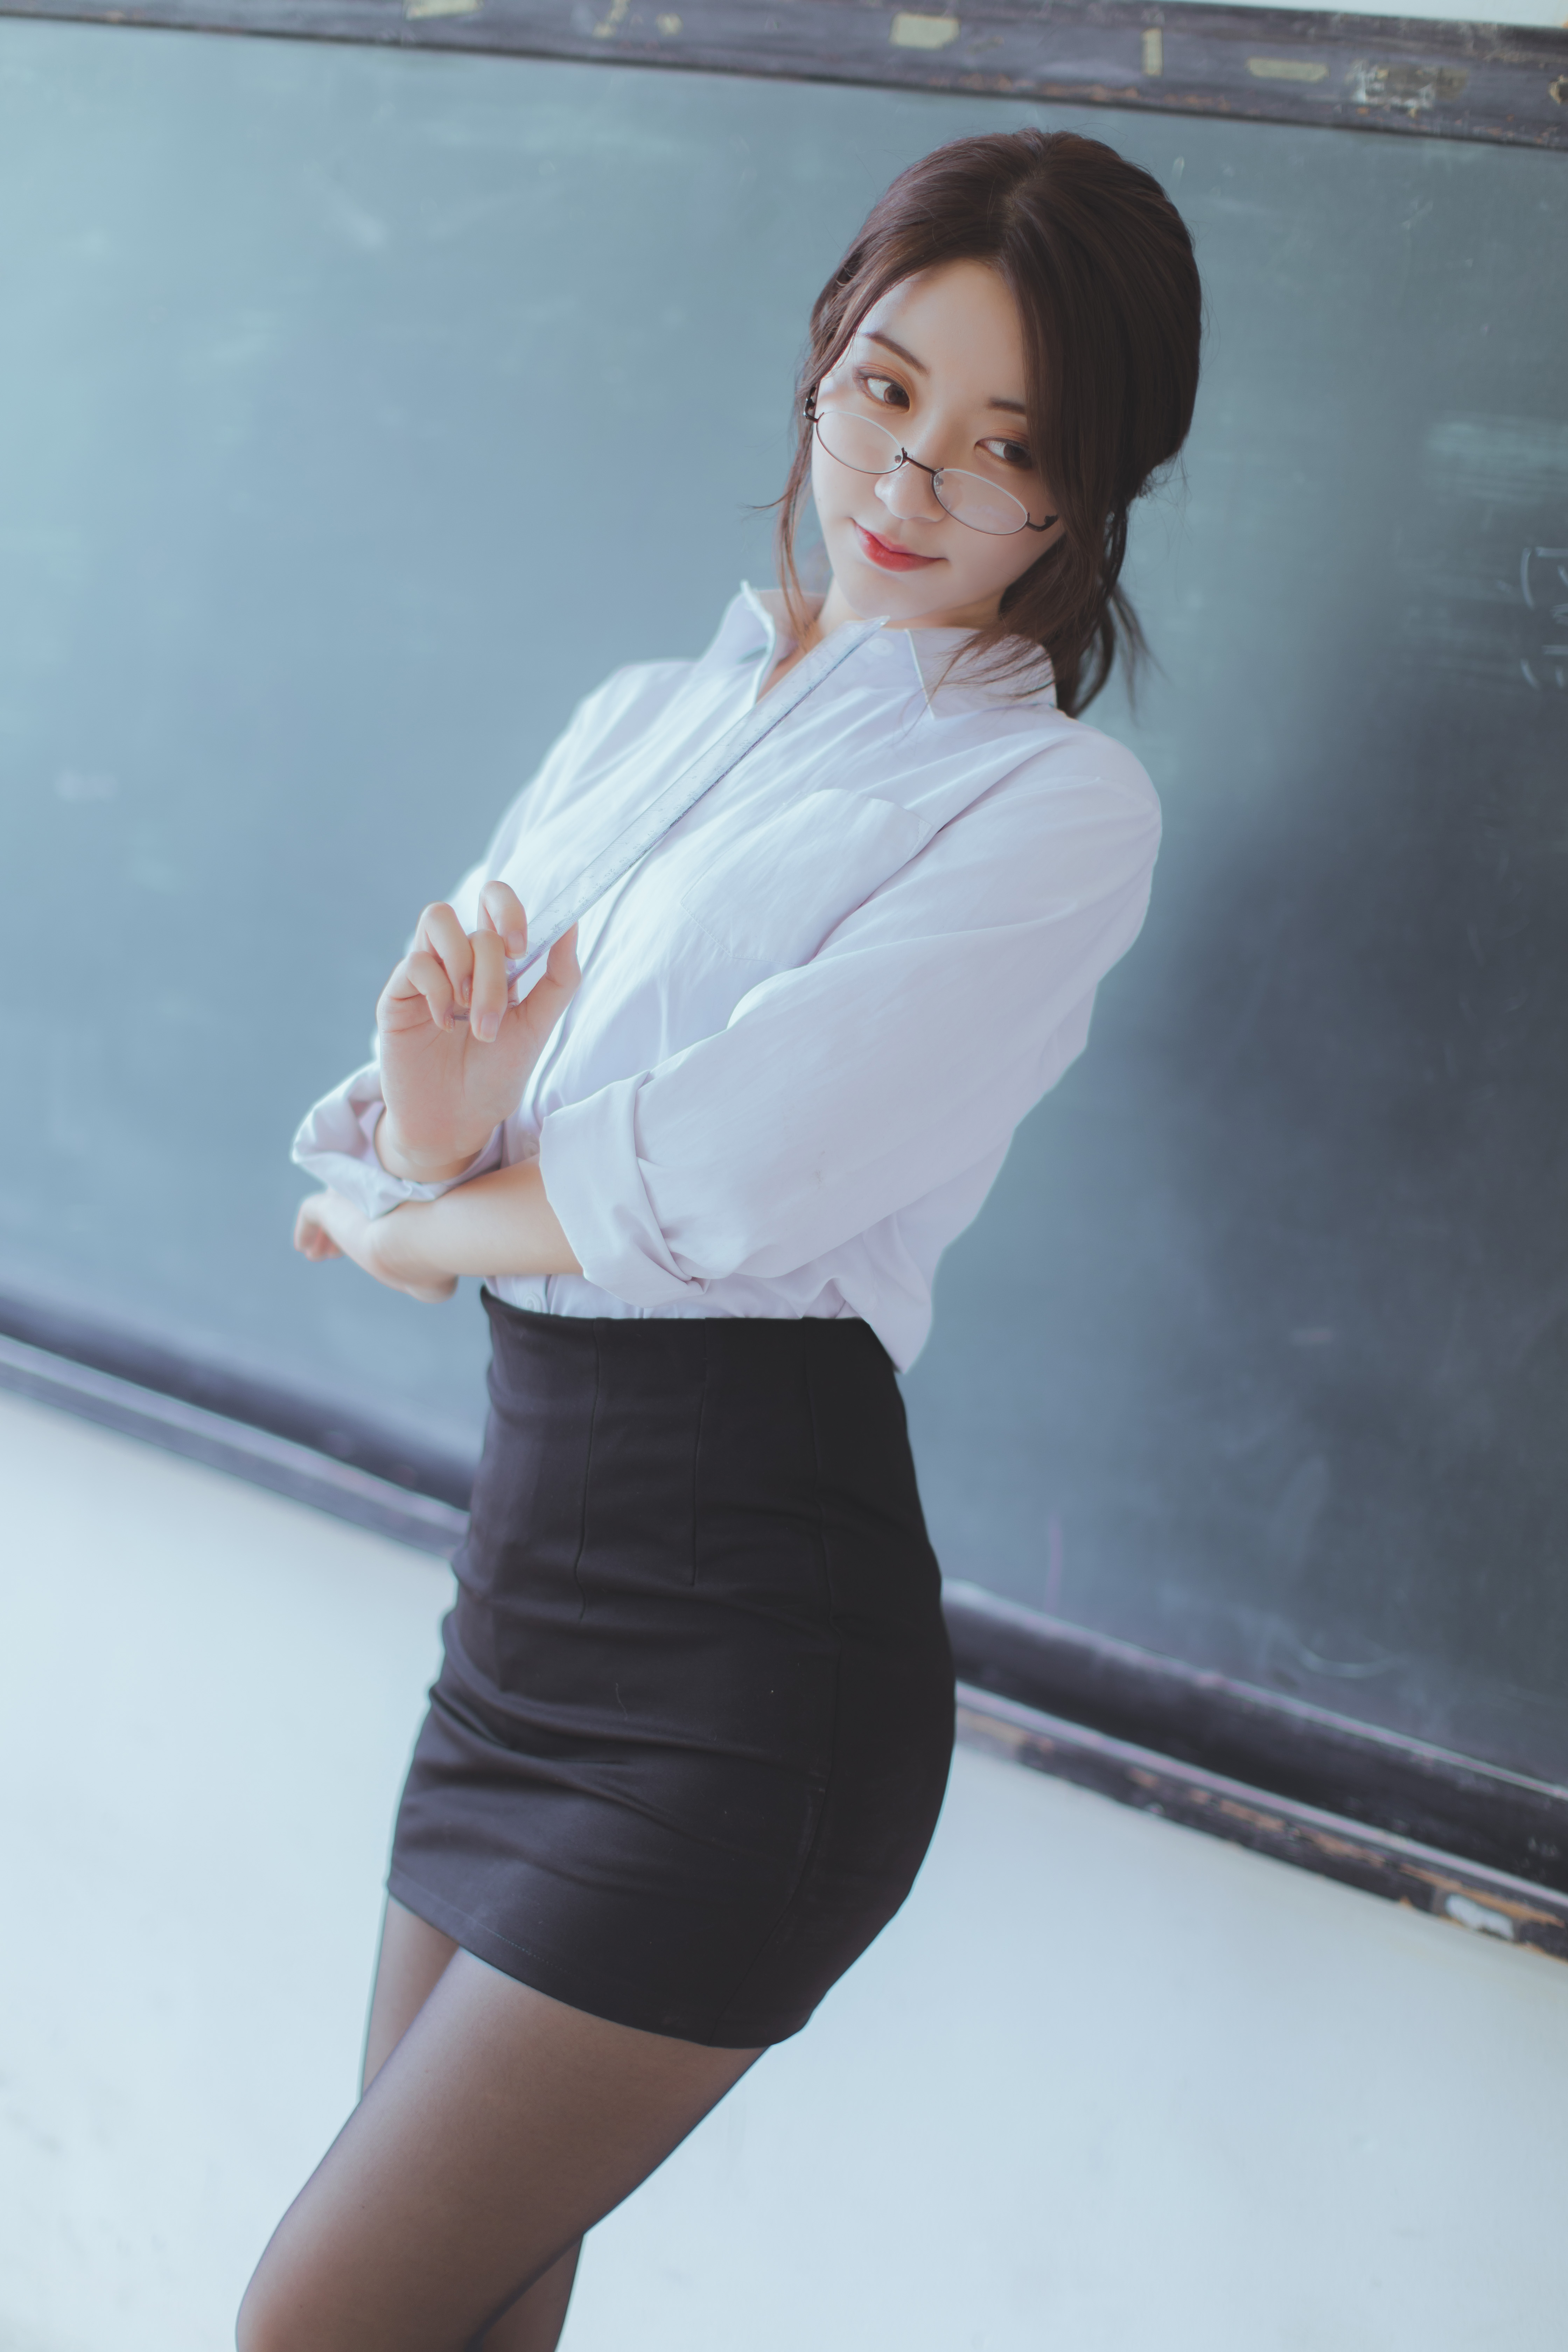 Model Teachers Asian 4480x6720